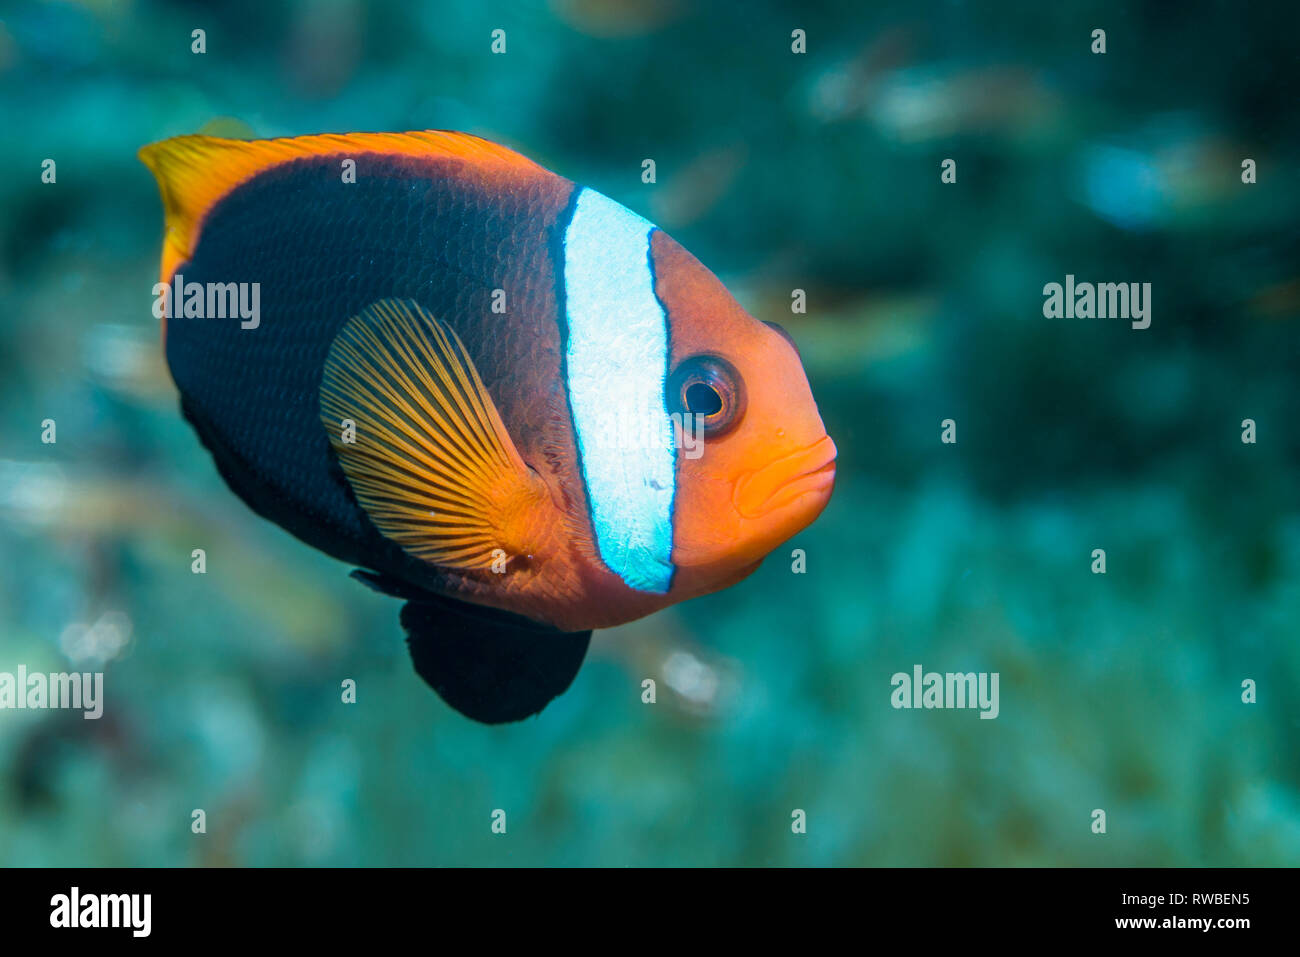 Tomato anemonefish [Amphiprion frenatus].  North Sulawesi, Indonesia. Stock Photo